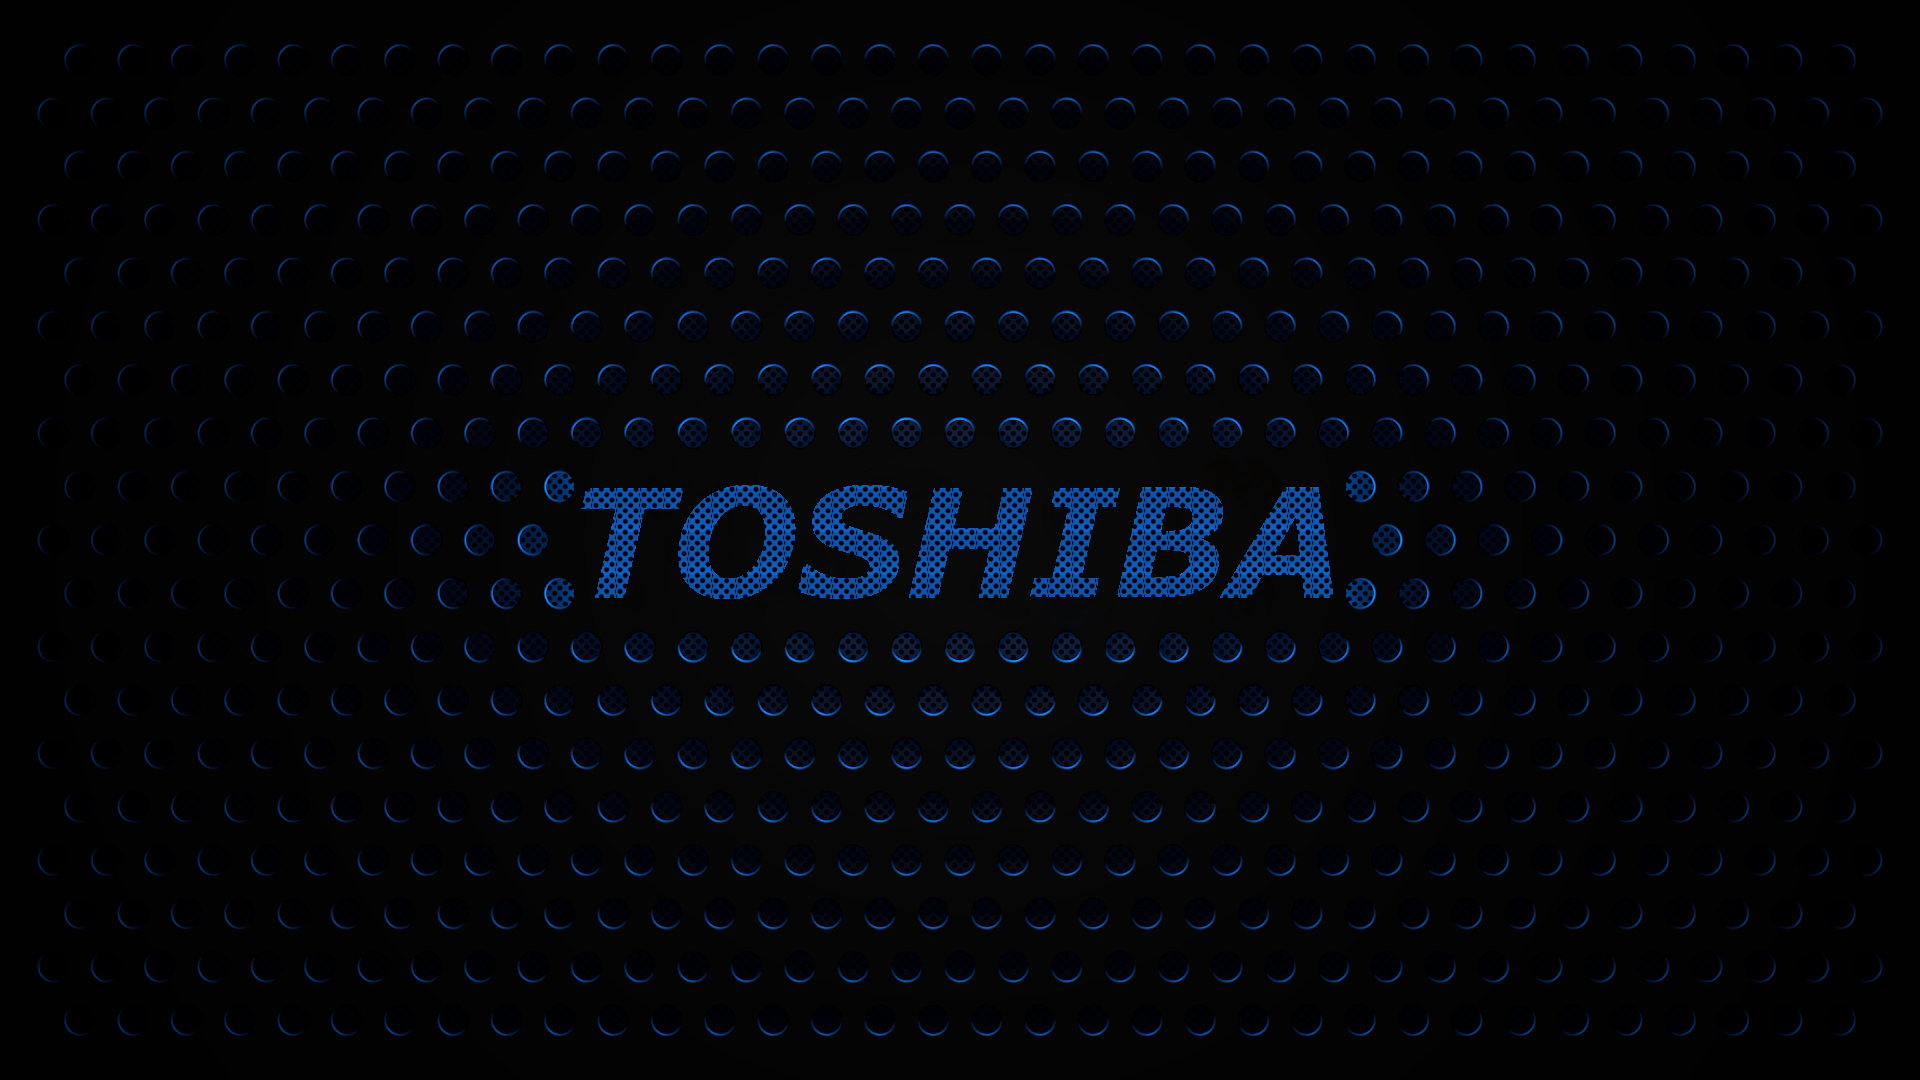 Toshiba By Daproba